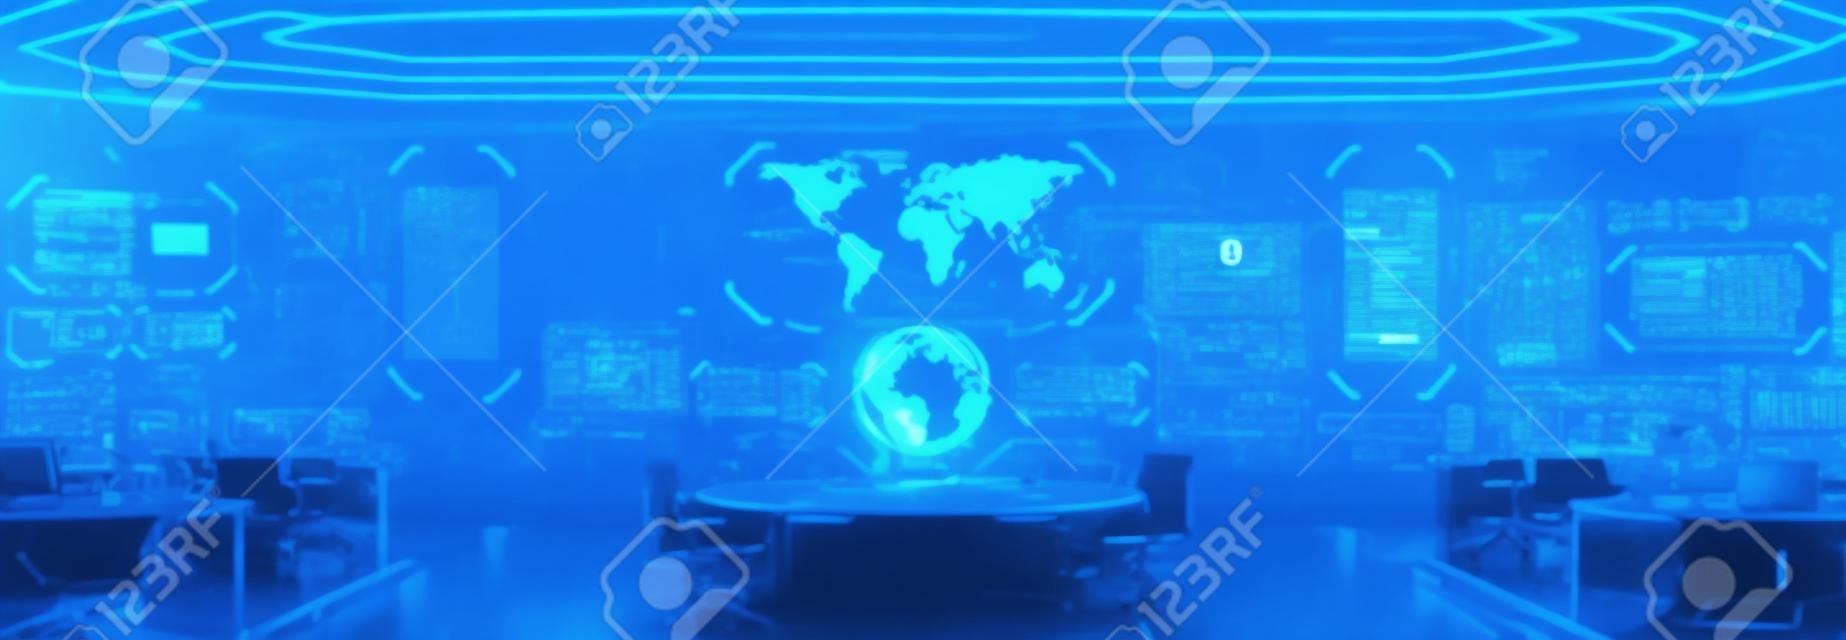 Command center interieur, cybersecurity, kamer, blauw